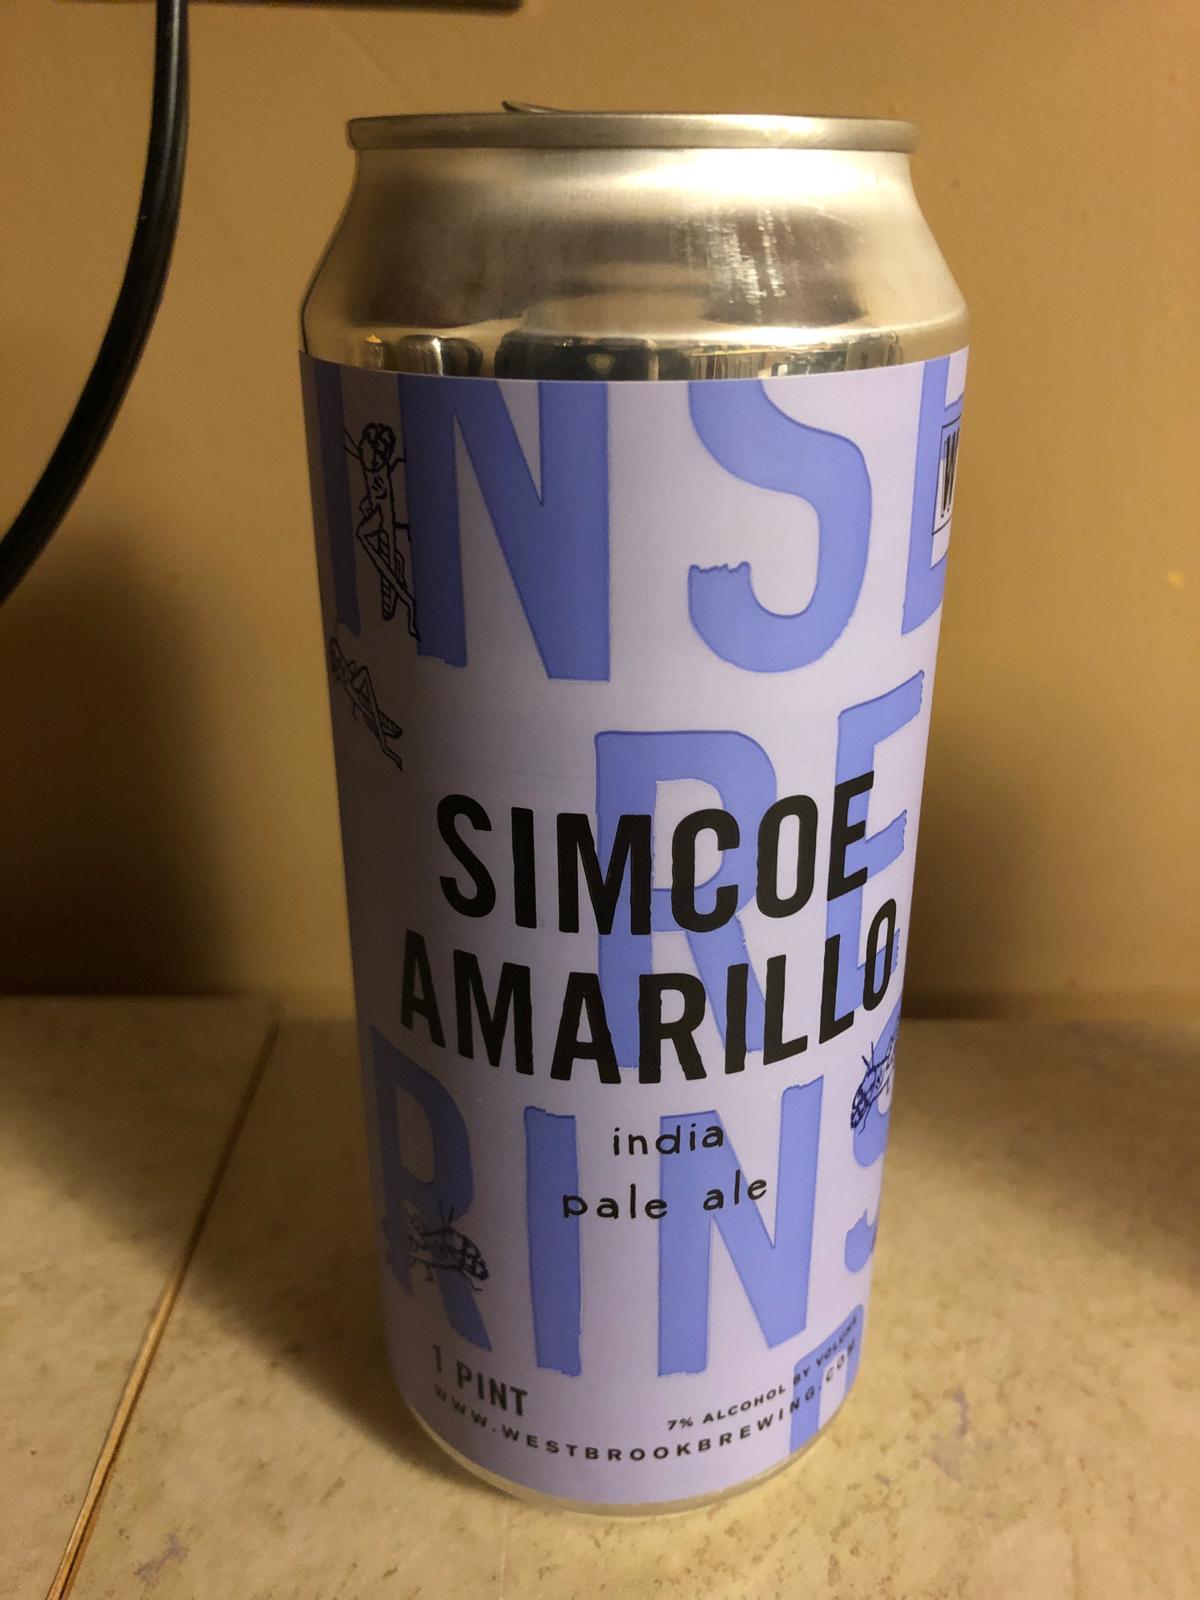 Amarillo/Simcoe IPA